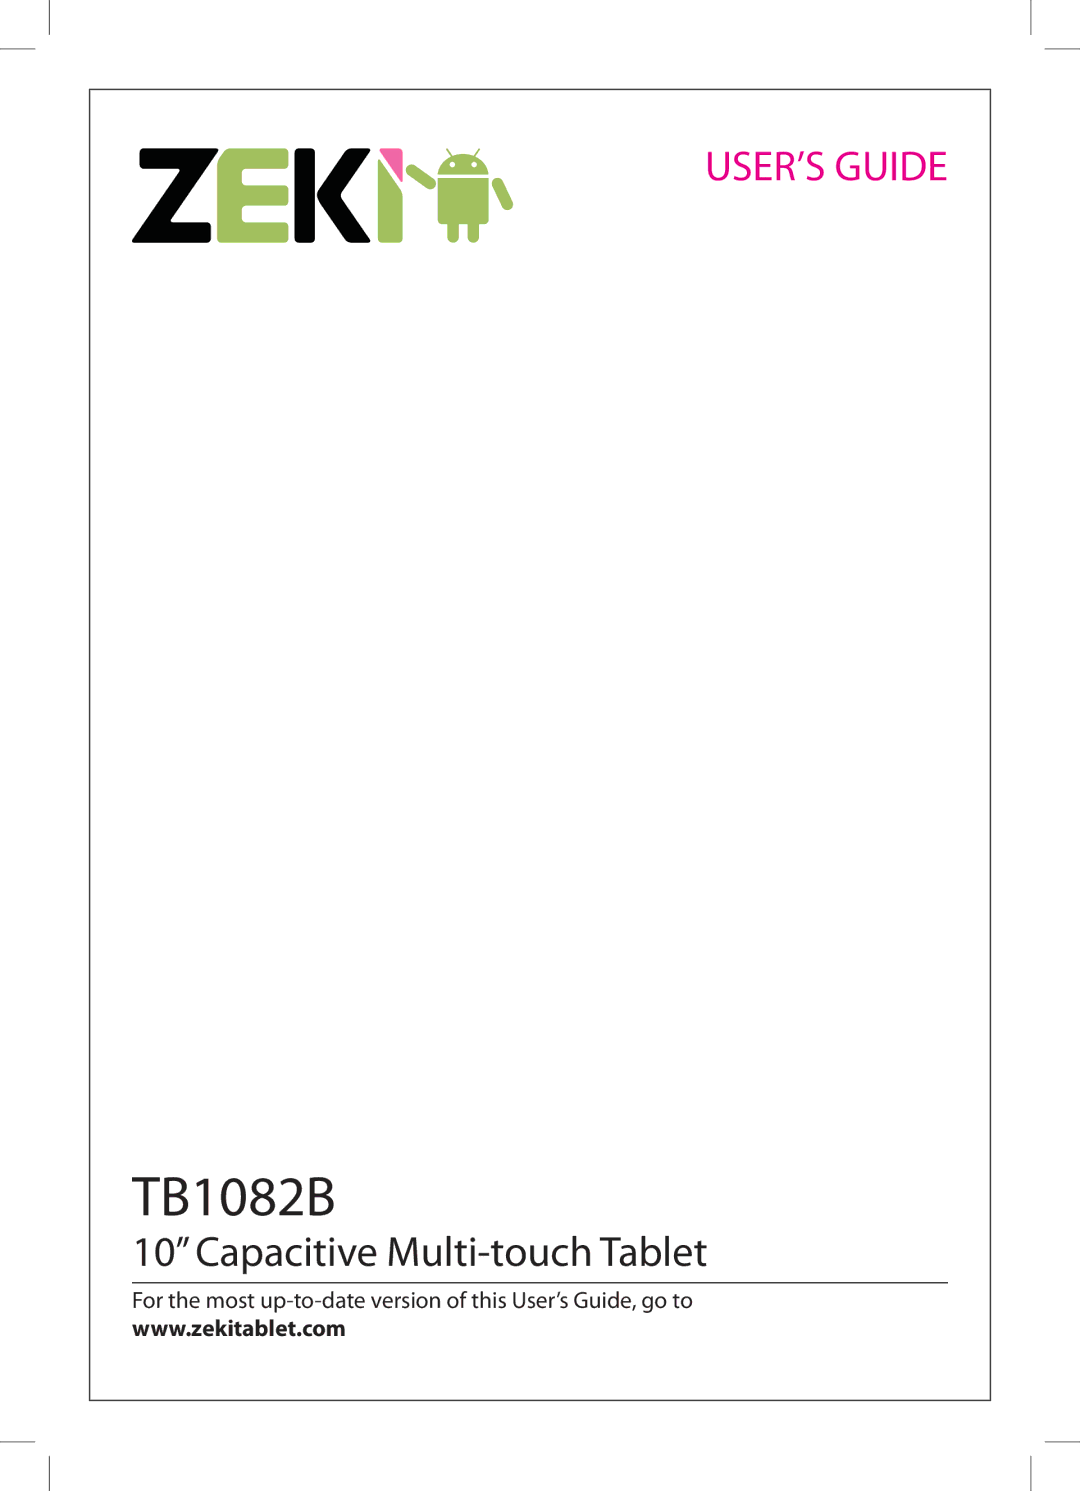 Zeki TB1082B manual 